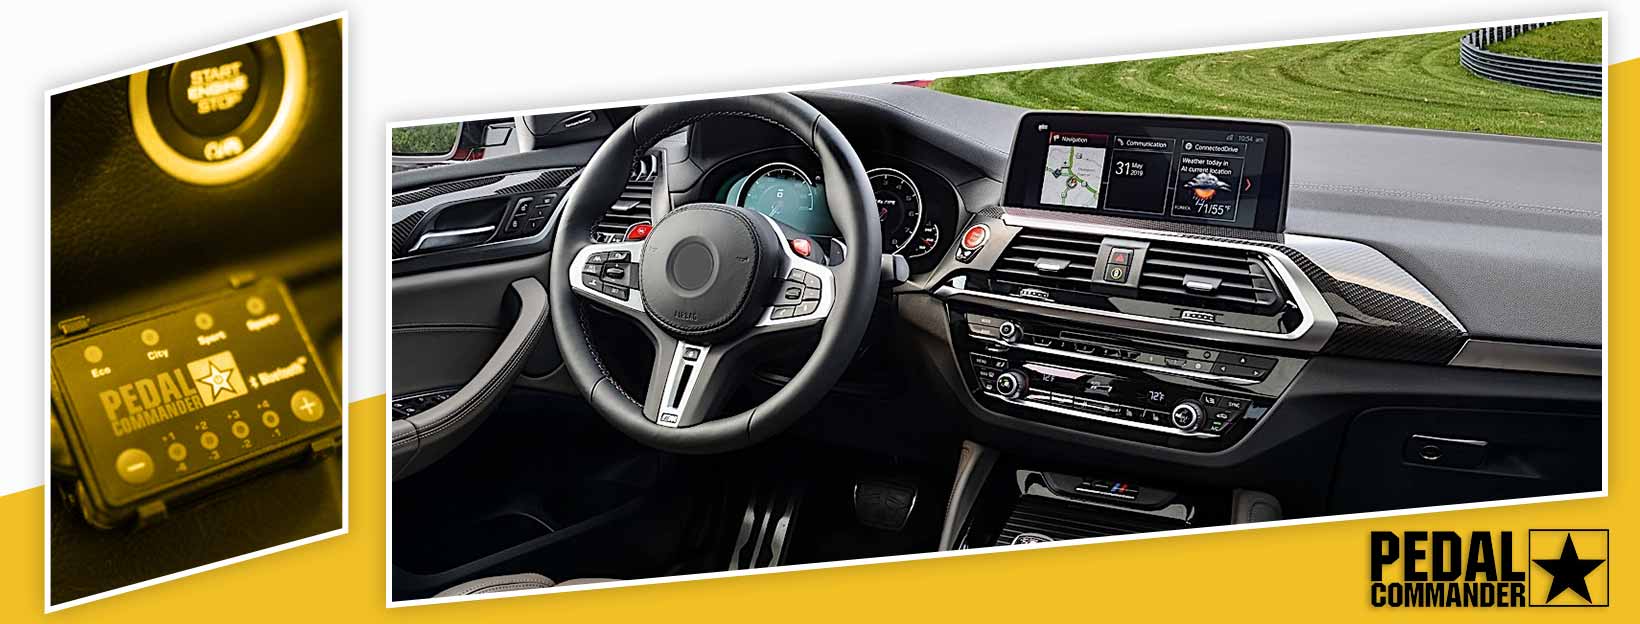 Pedal Commander for BMW X4 - interior